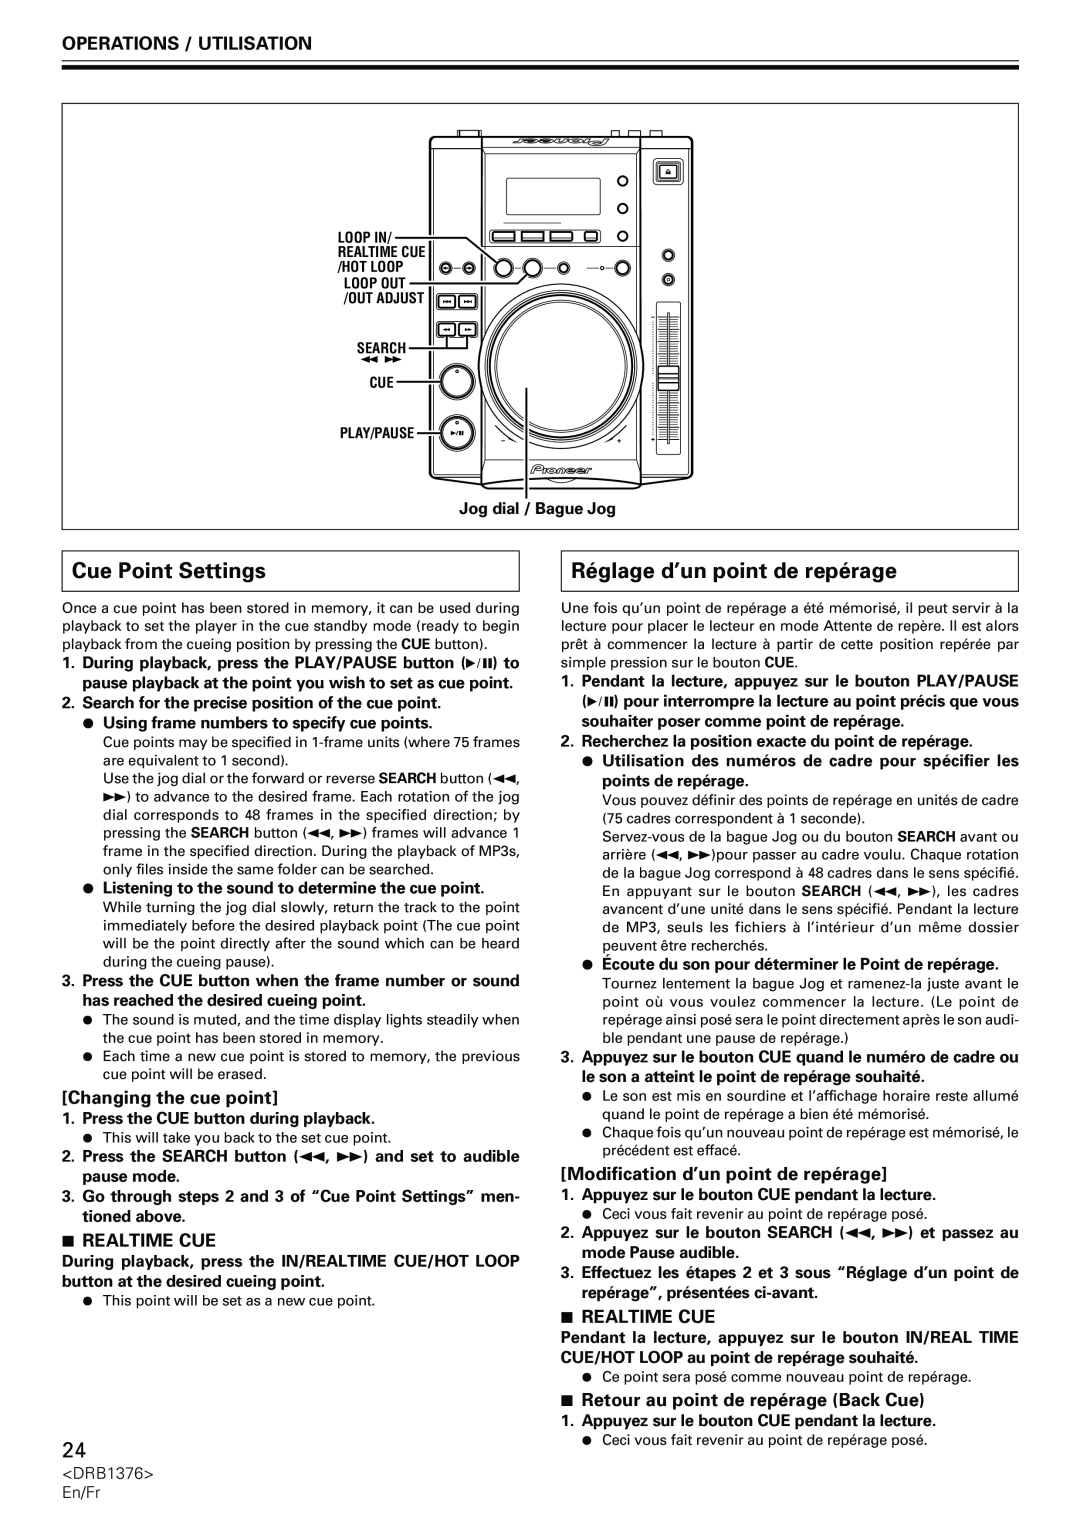 Pioneer CDJ-200 manual Cue Point Settings, Réglage d’un point de repérage, Changing the cue point, 7REALTIME CUE 